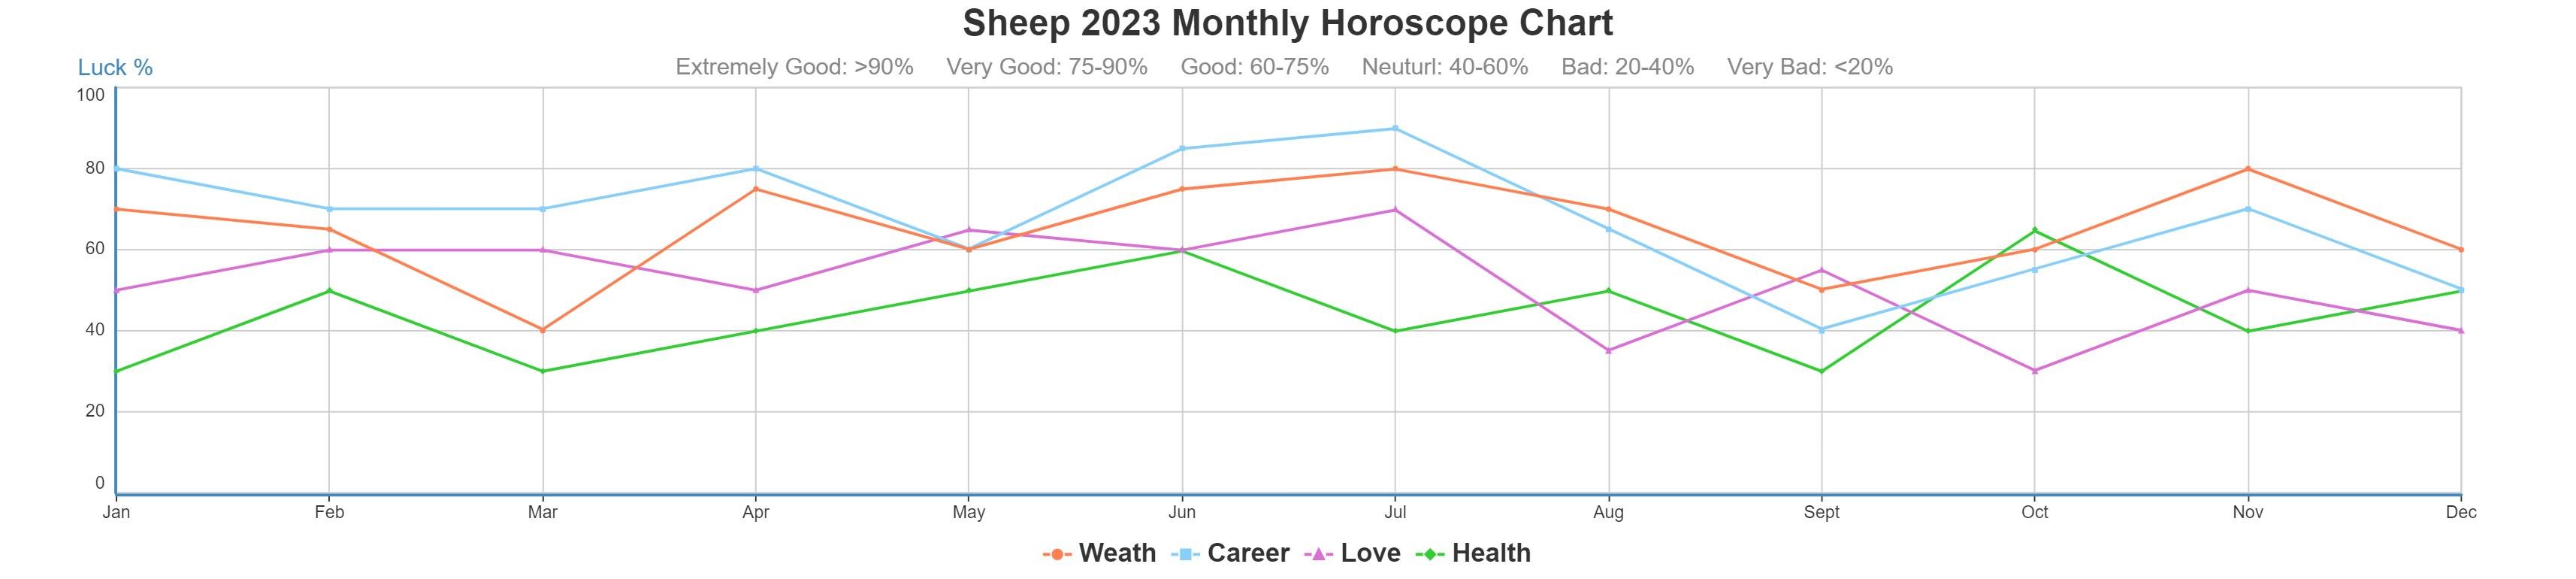 Sheep 2023 monthly horoscope